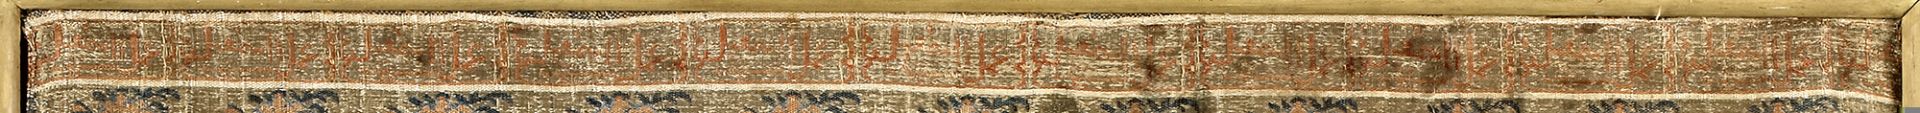 A SAFAVID SILK AND METAL TEXTILE, WITH ARABIC INSCRIPTIONS, 17TH CENTURY - Bild 2 aus 2